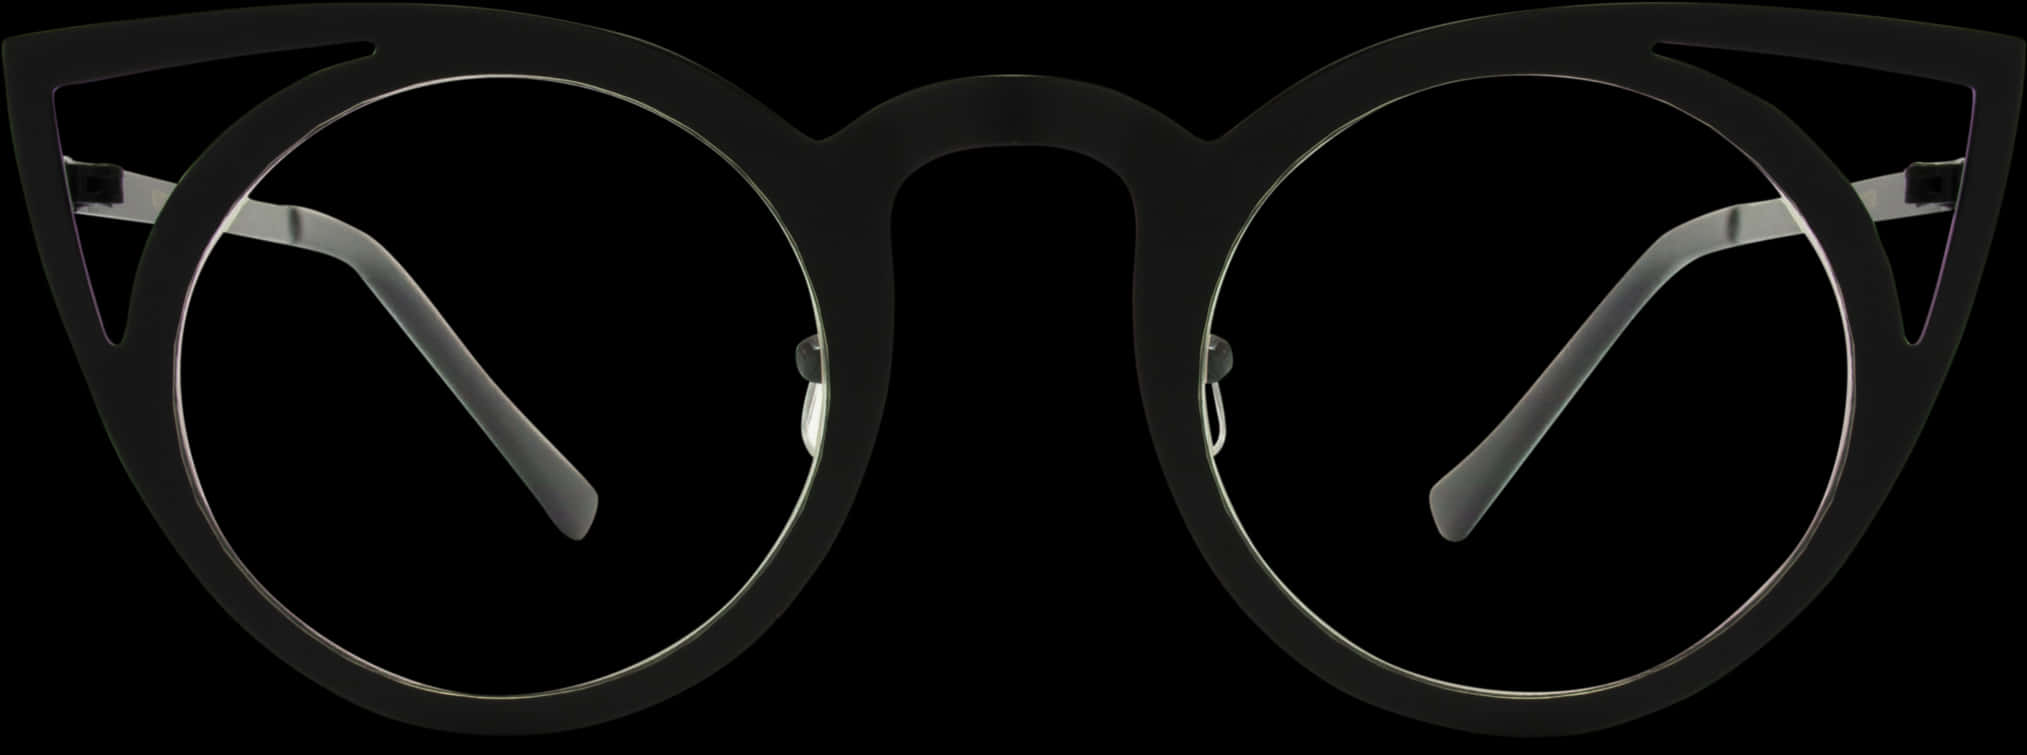 Black Round Glasses Transparent Background PNG image